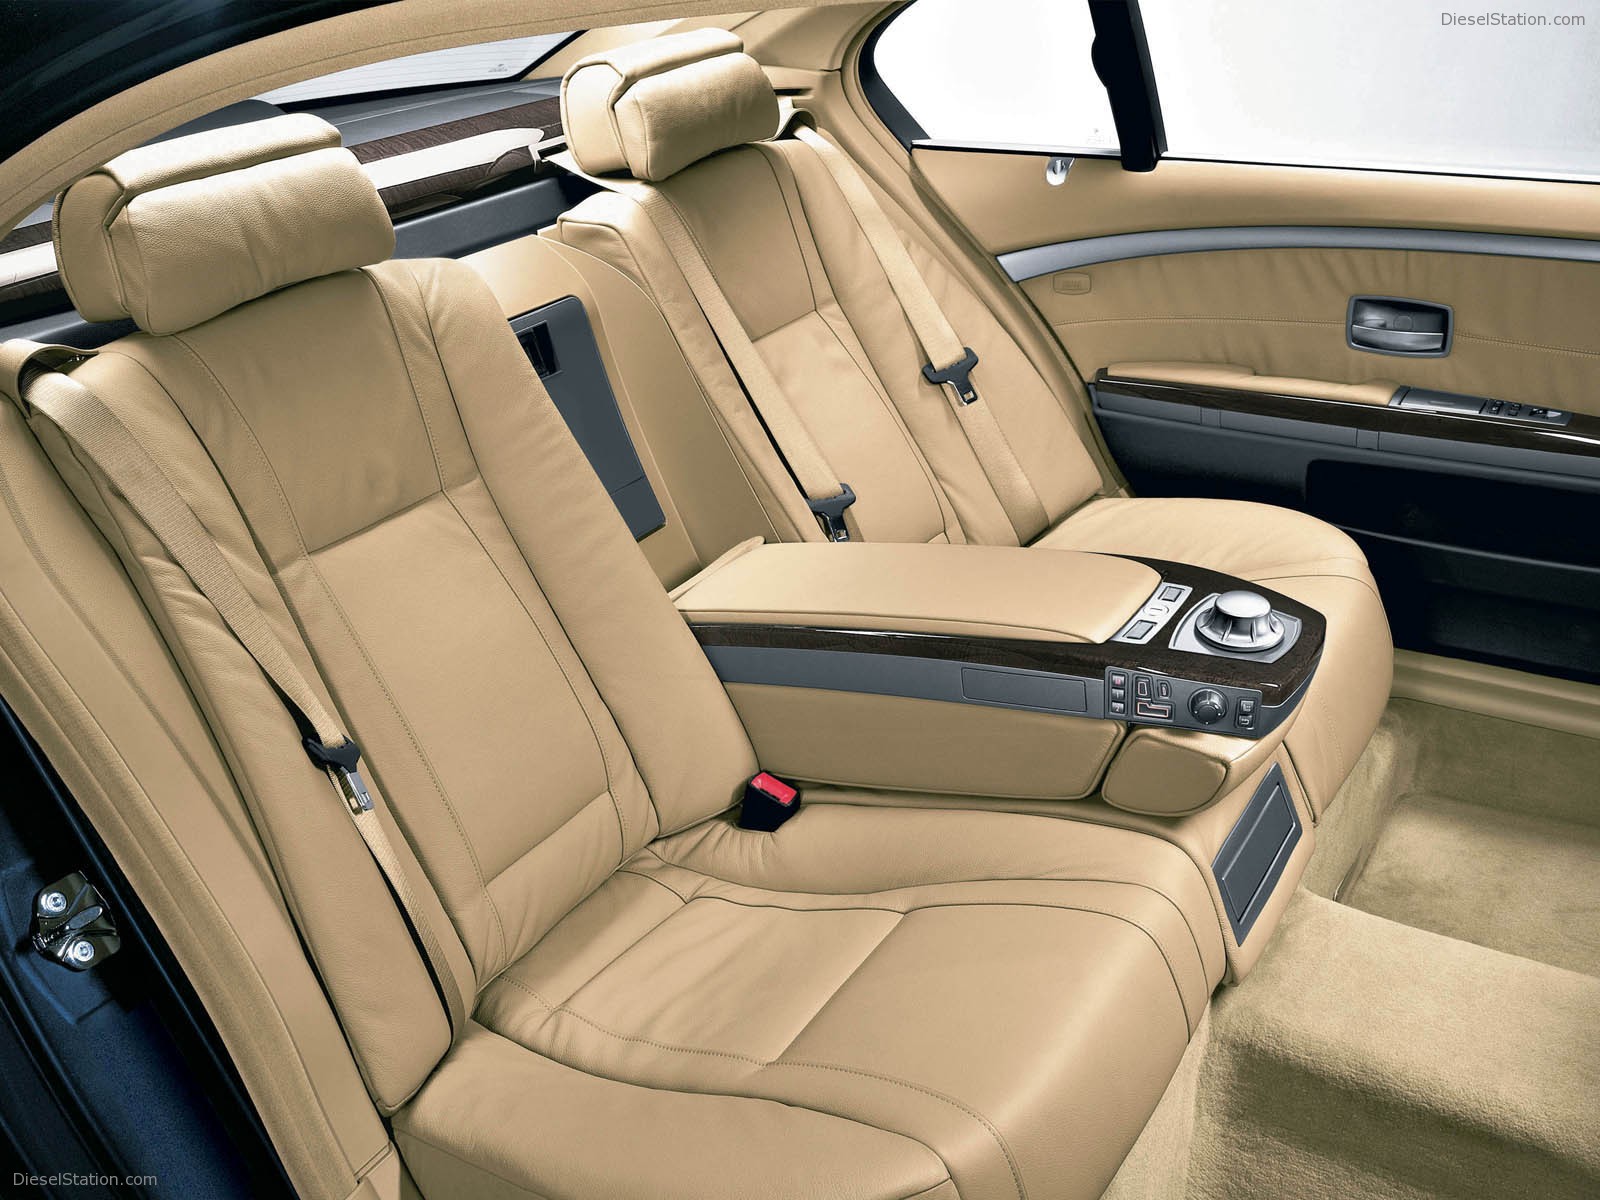 BMW 7 Series Interior Rear Cabin